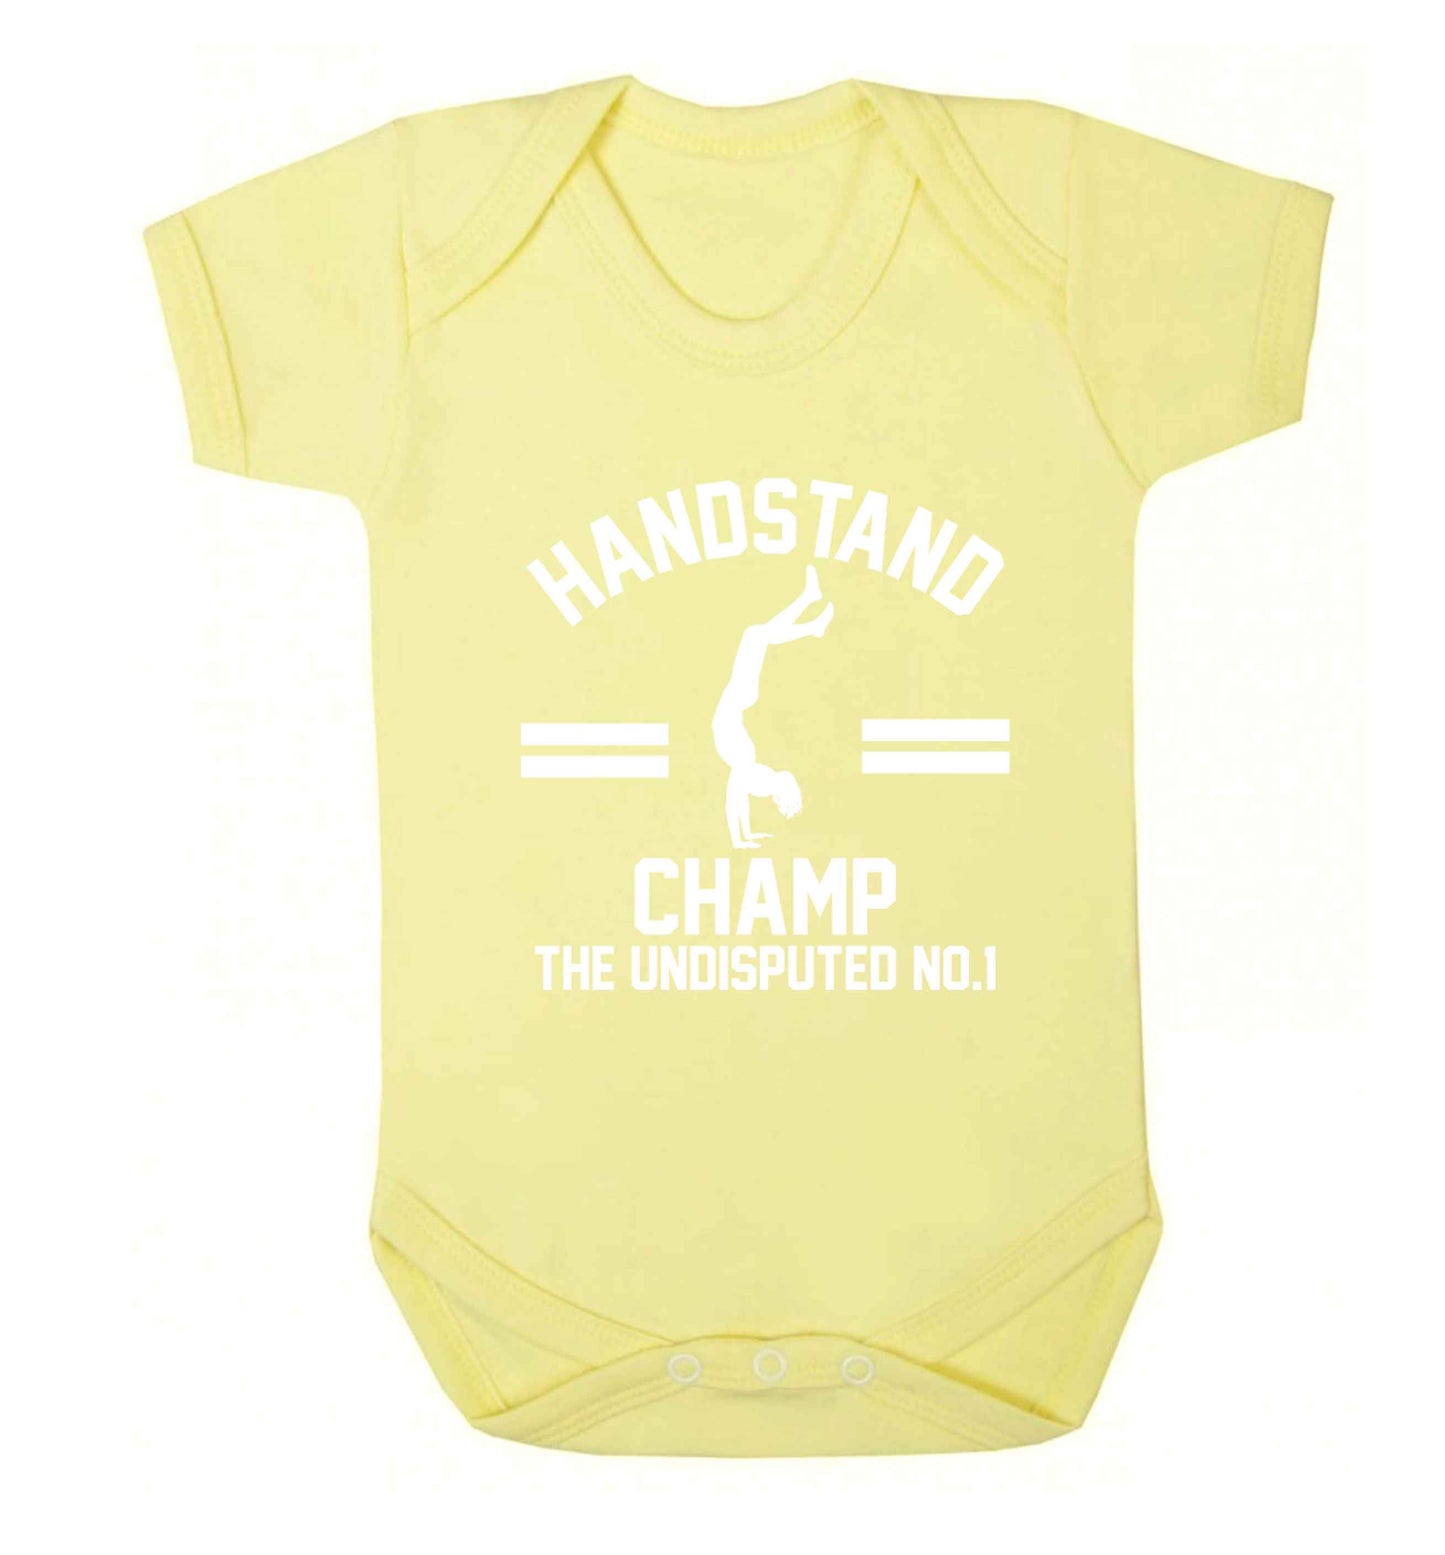 Undisputed handstand championship no.1  Baby Vest pale yellow 18-24 months